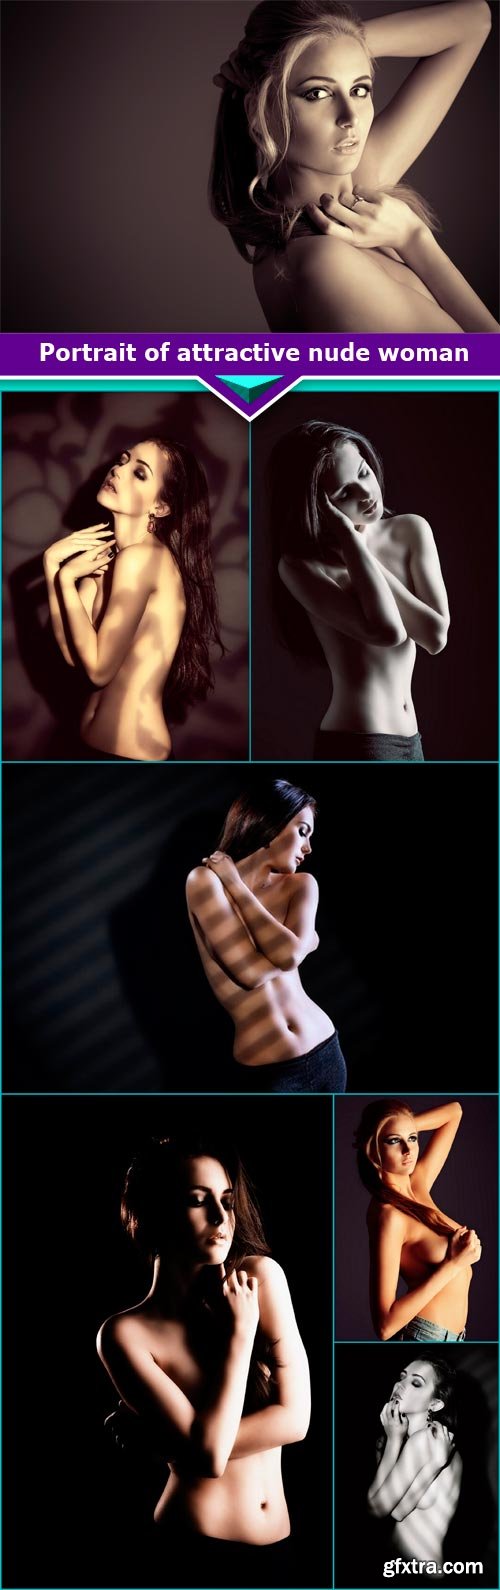 Portrait of attractive nude woman 7x JPEG